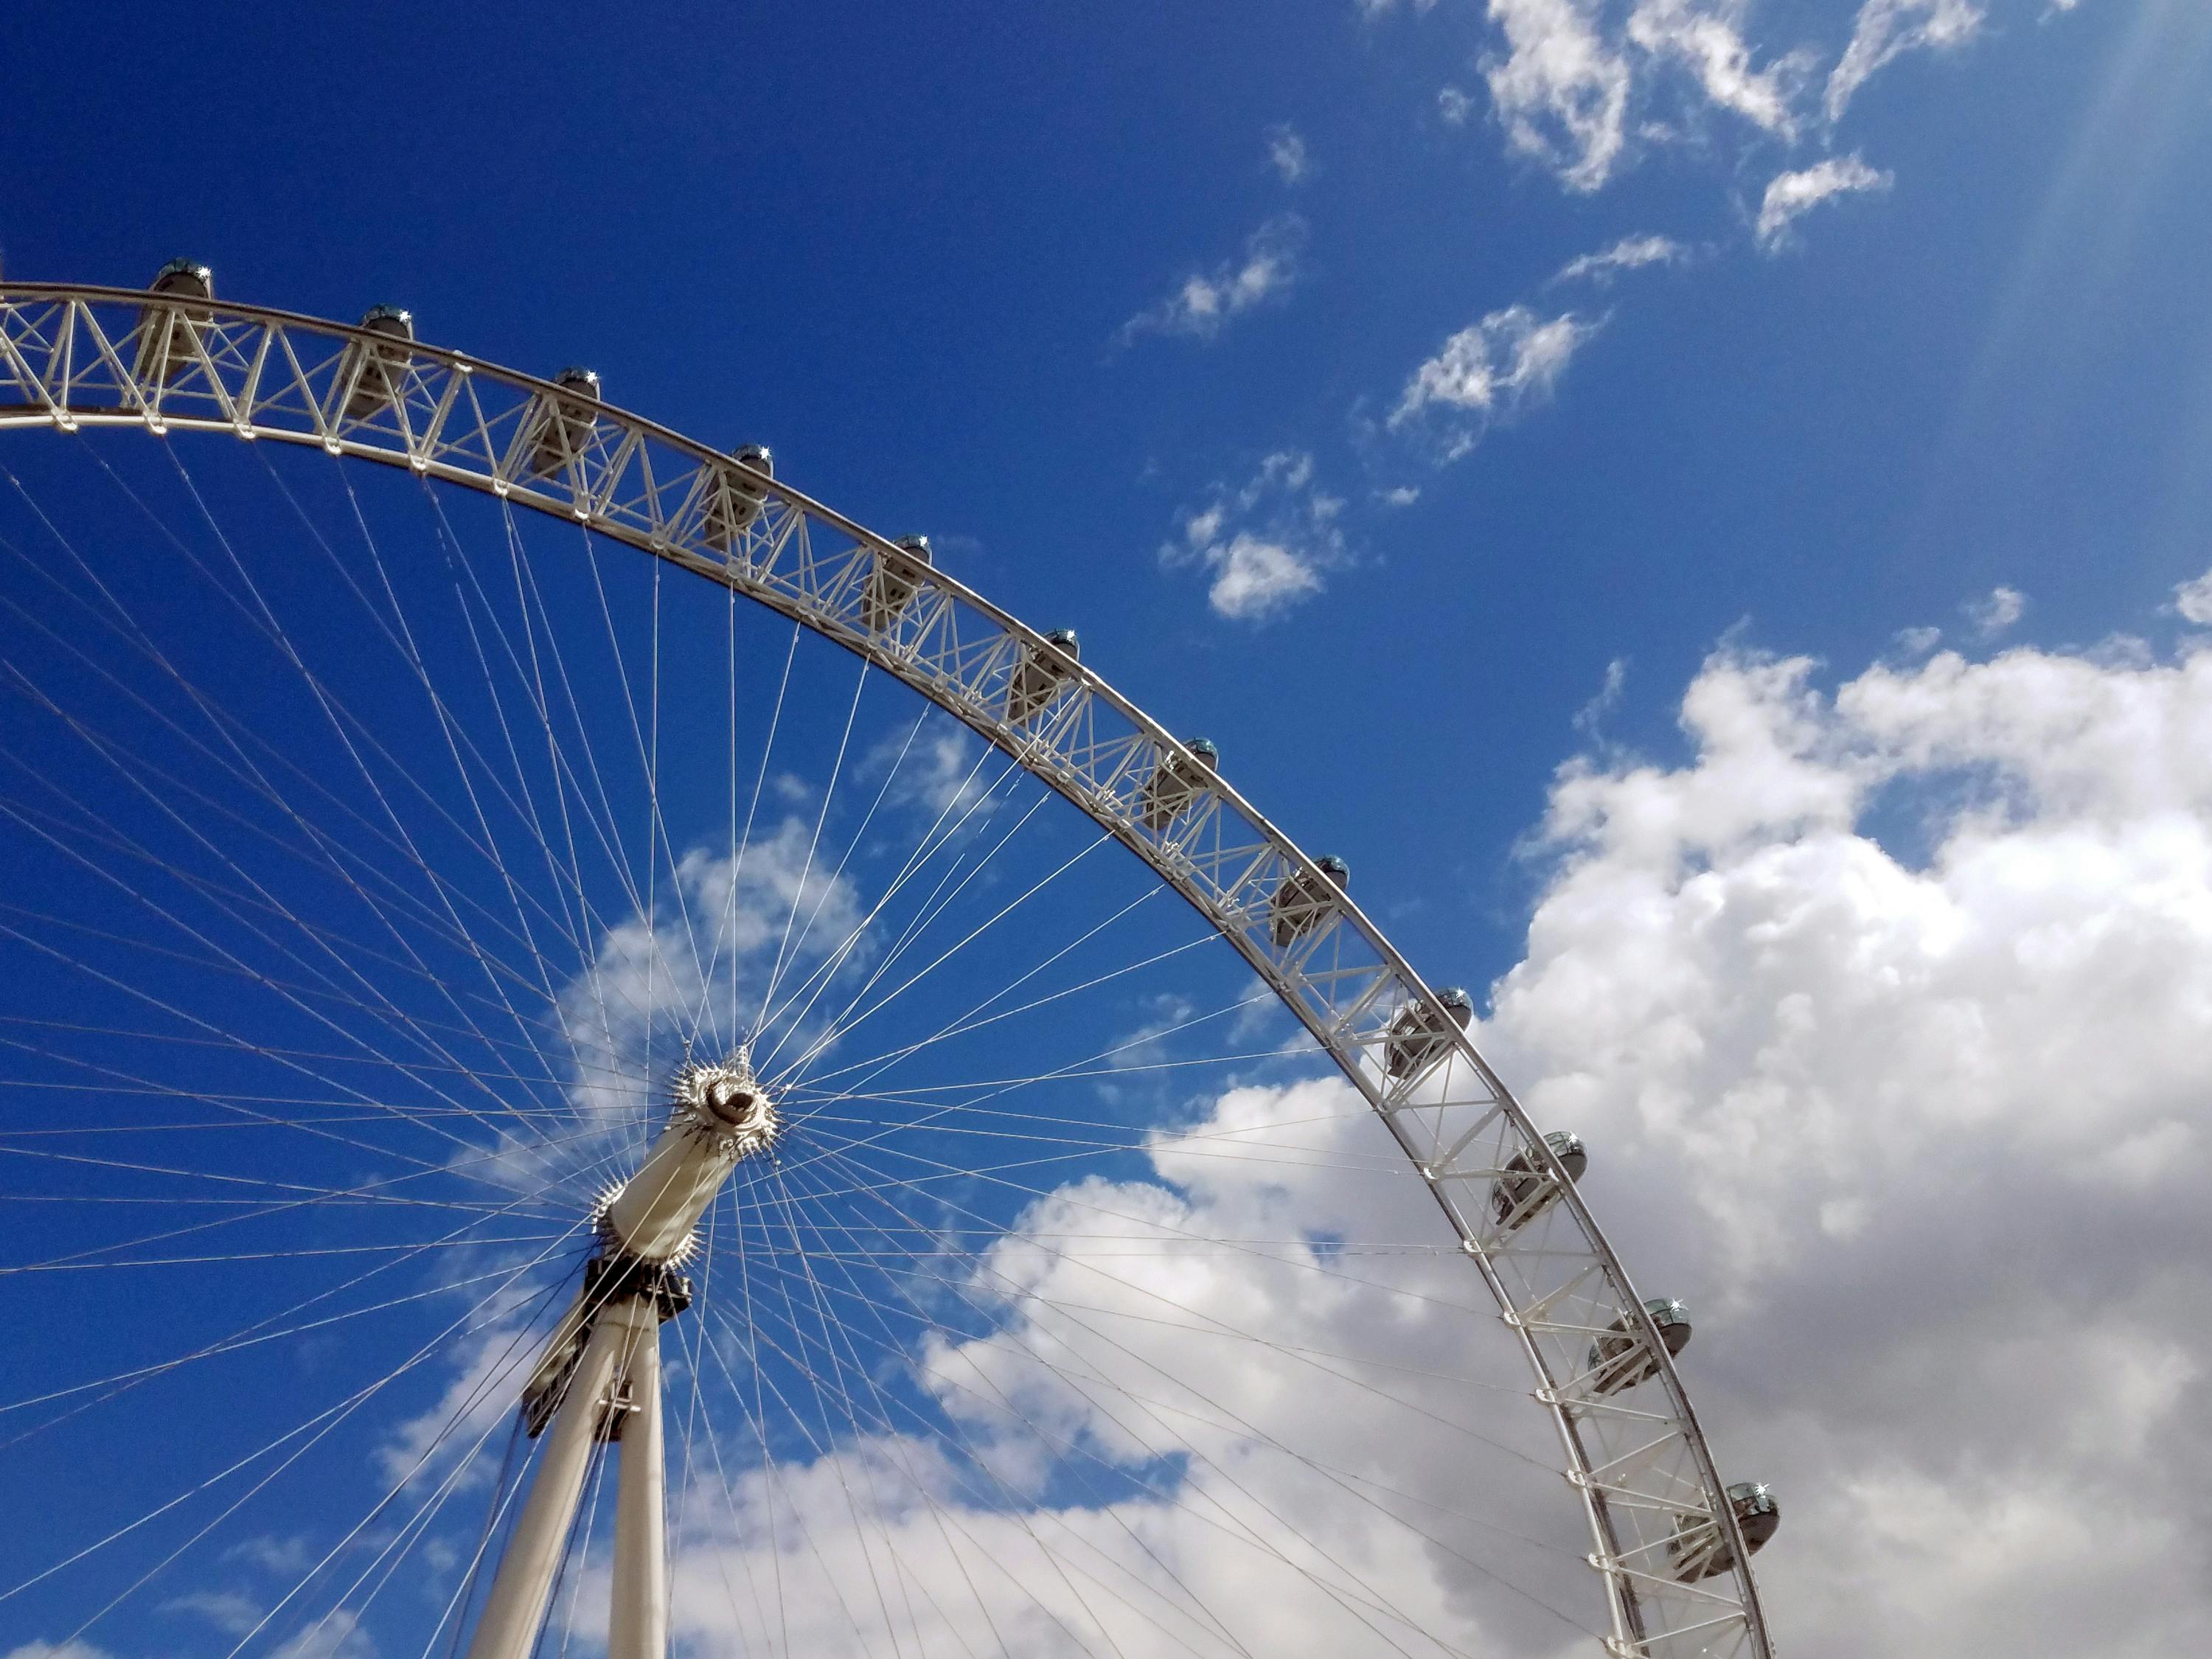 Free stock photo of blue sky, london, london eye